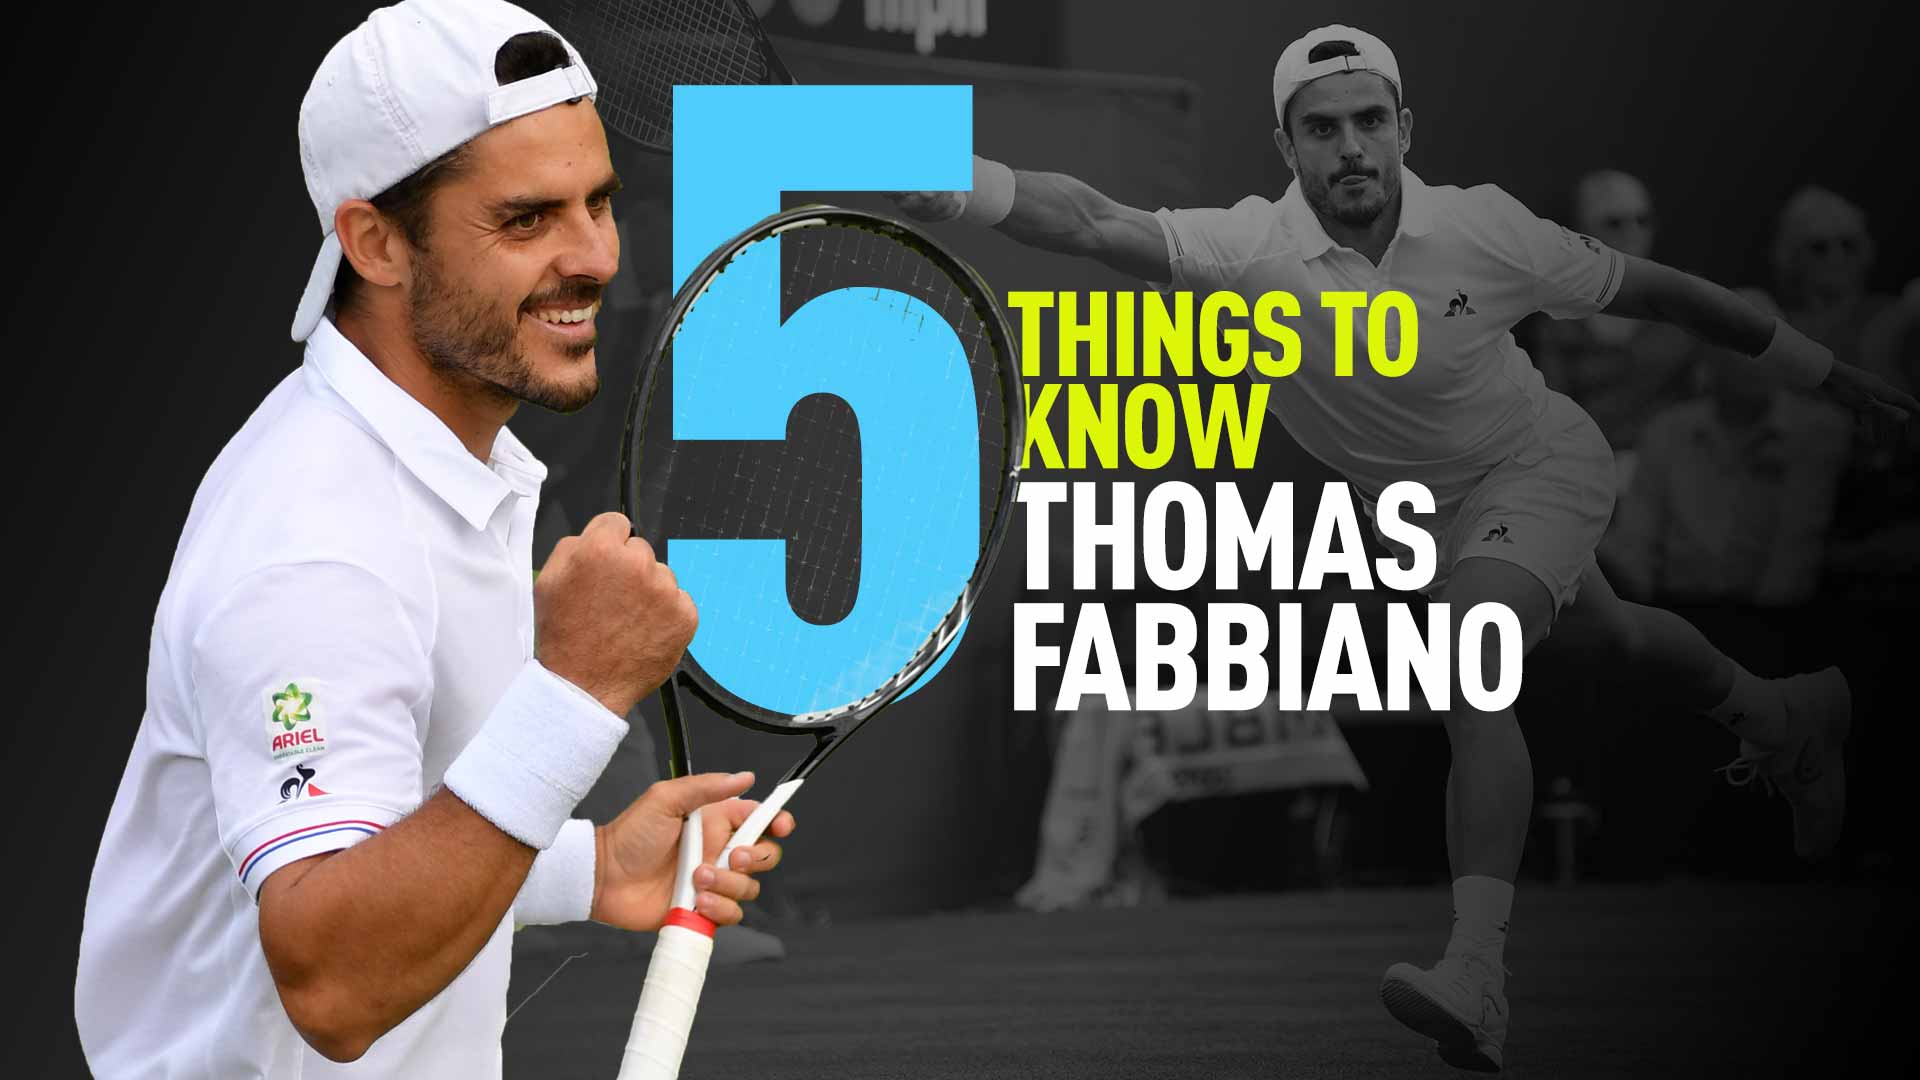 Italian Thomas Fabbiano, who upset Stefanos Tsitsipas, is through to the Wimbledon third round for a second straight year.